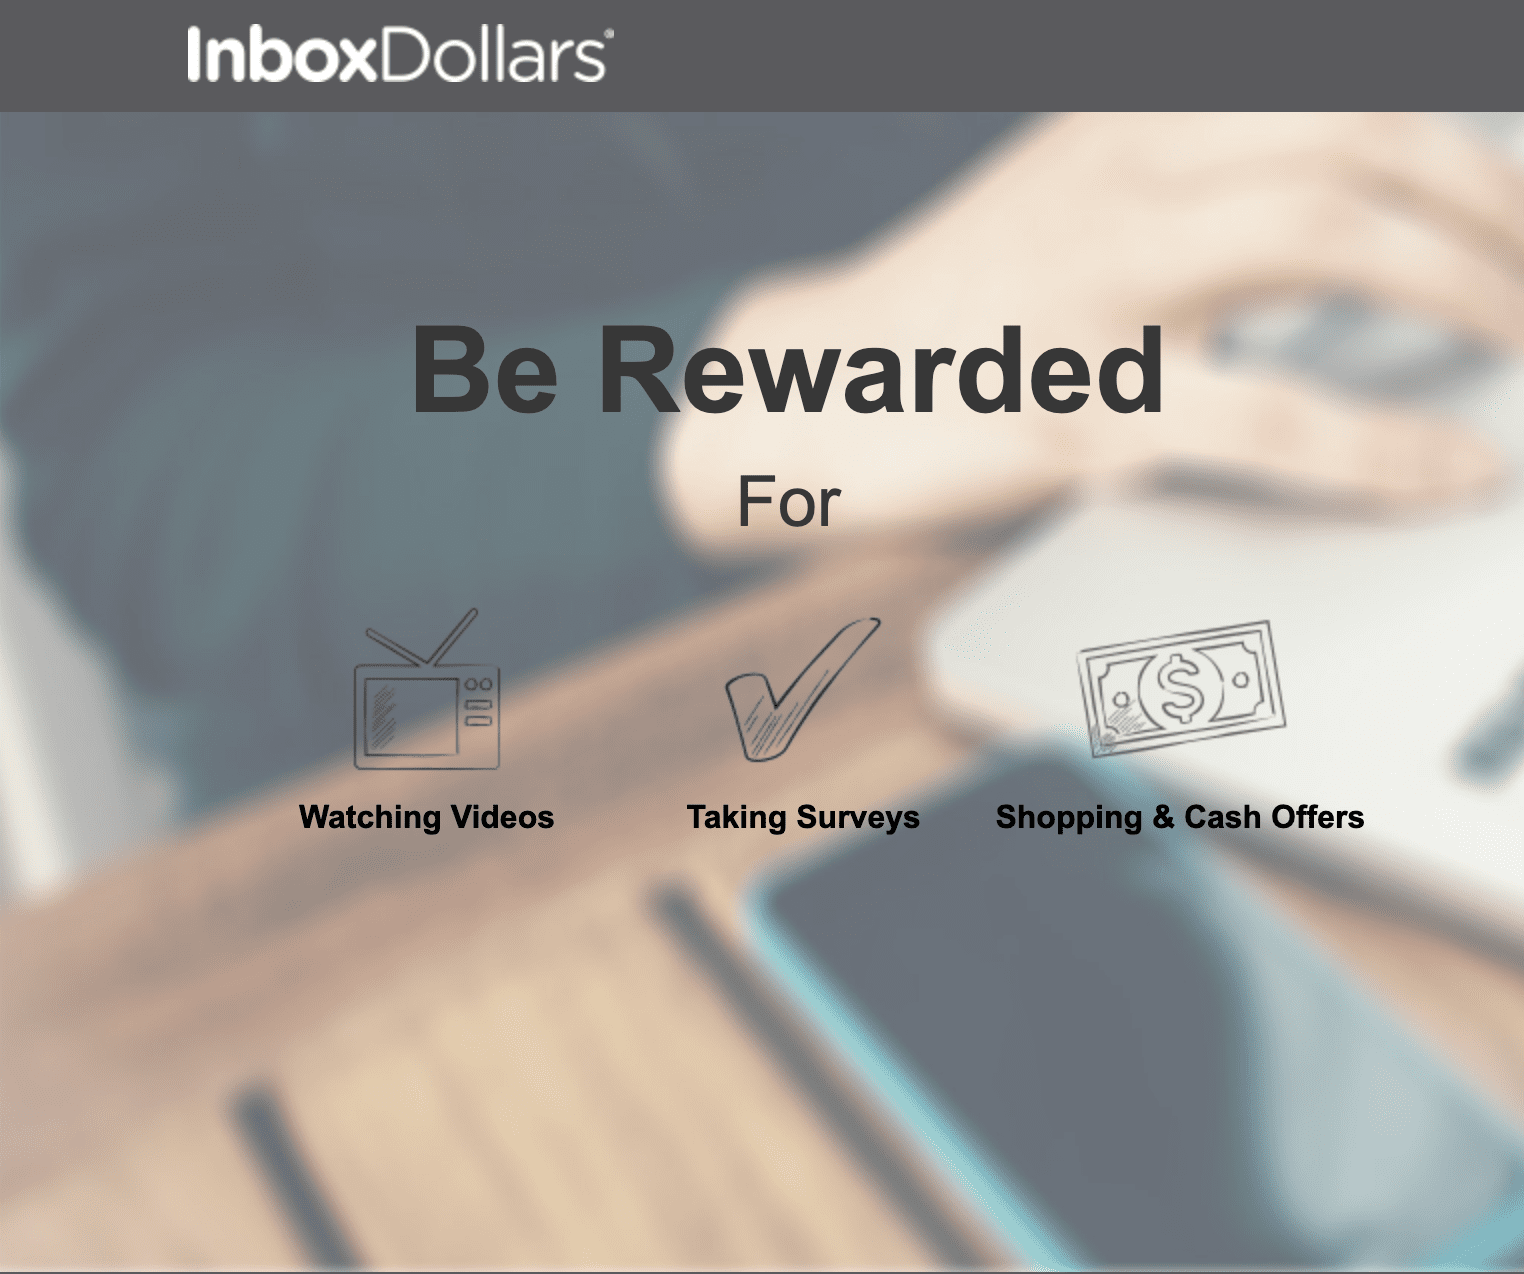 Inboxdollars: How To Make 50 Dollars Fast